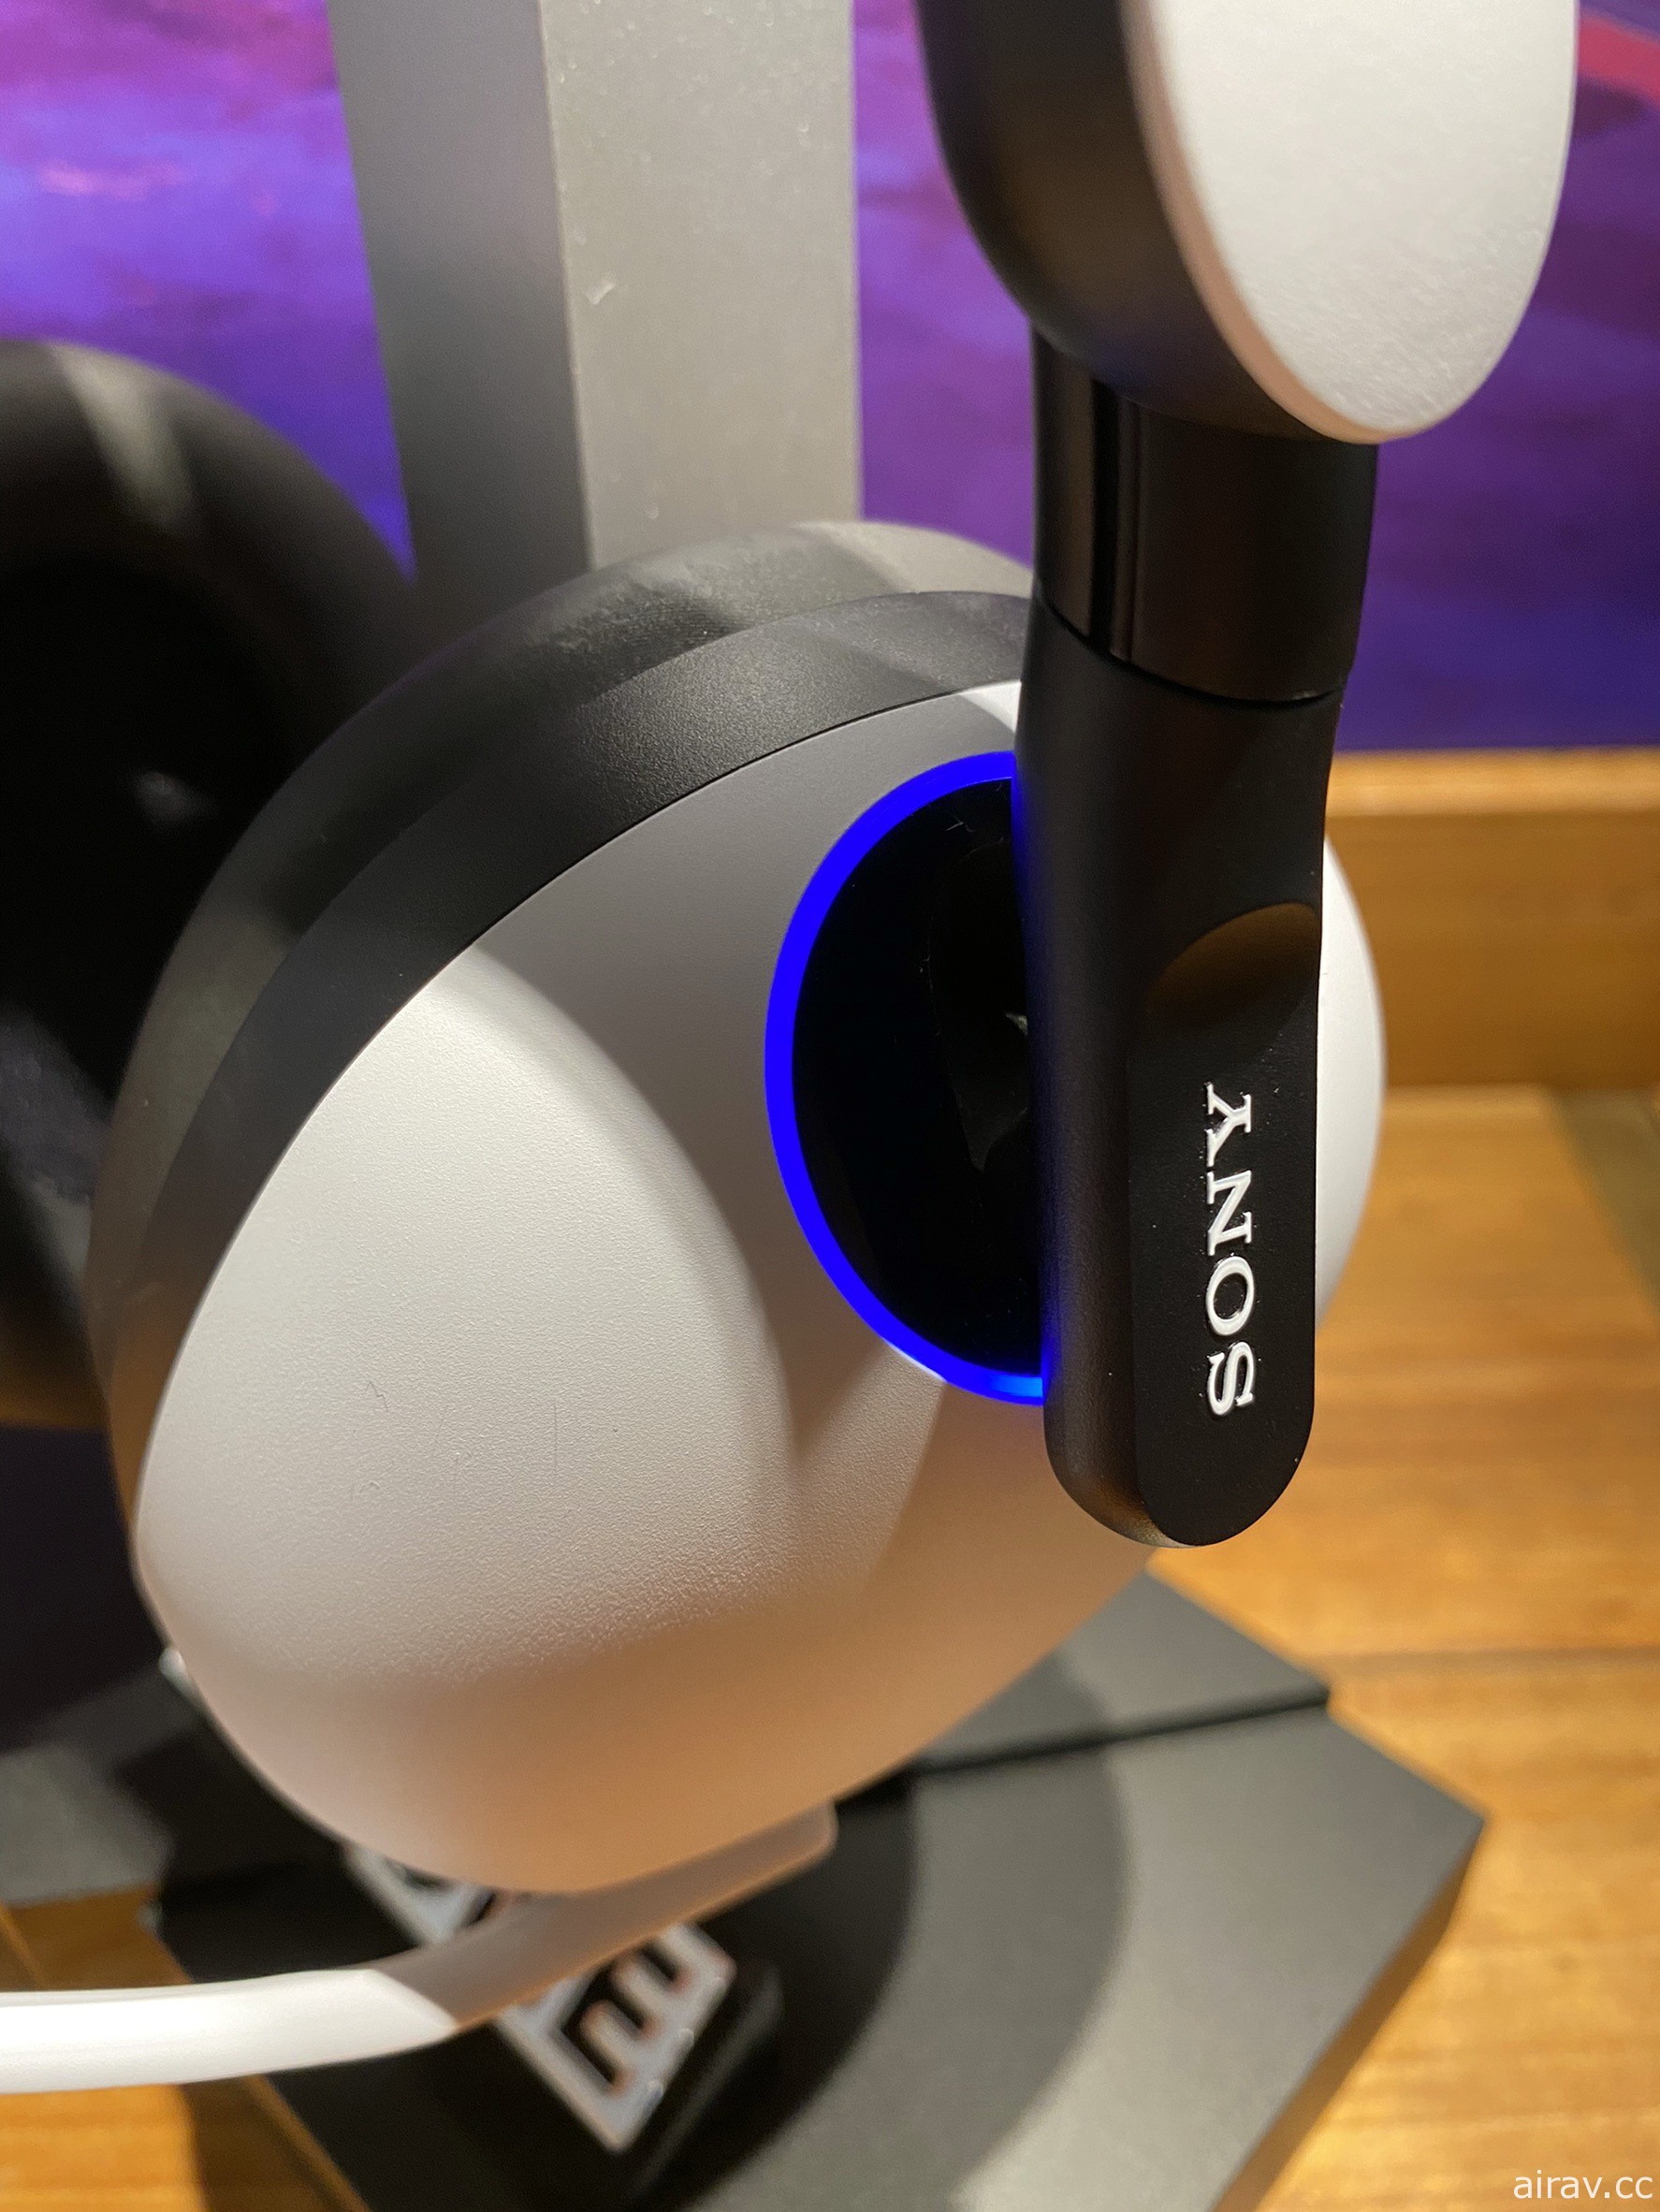 SONY 在台推出 INZONE H9、H7 等新電競耳機 結合 360 度空間音效、還可與 PS5 搭配